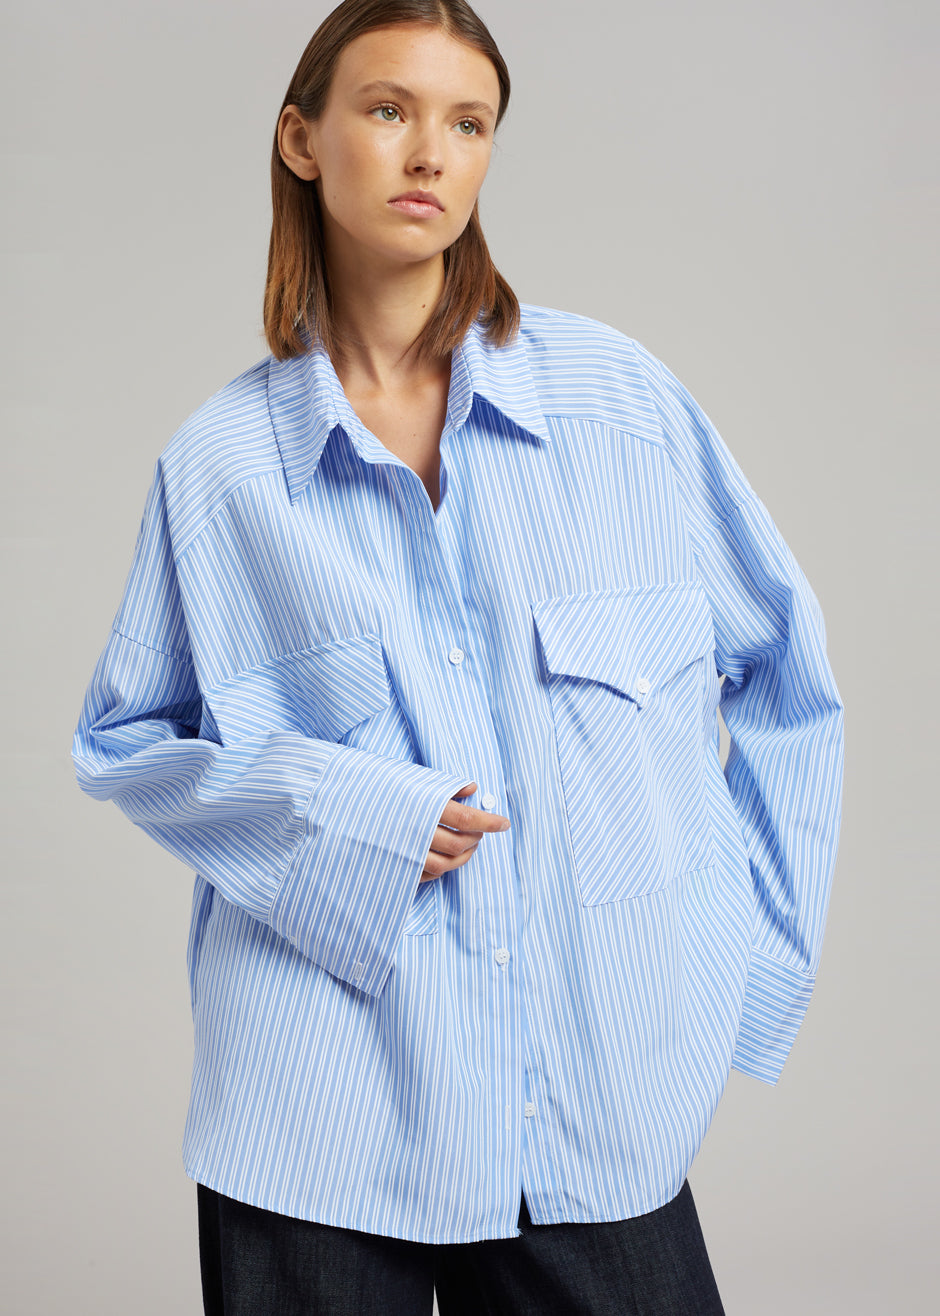 Orson Pocket Shirt - Blue Stripe